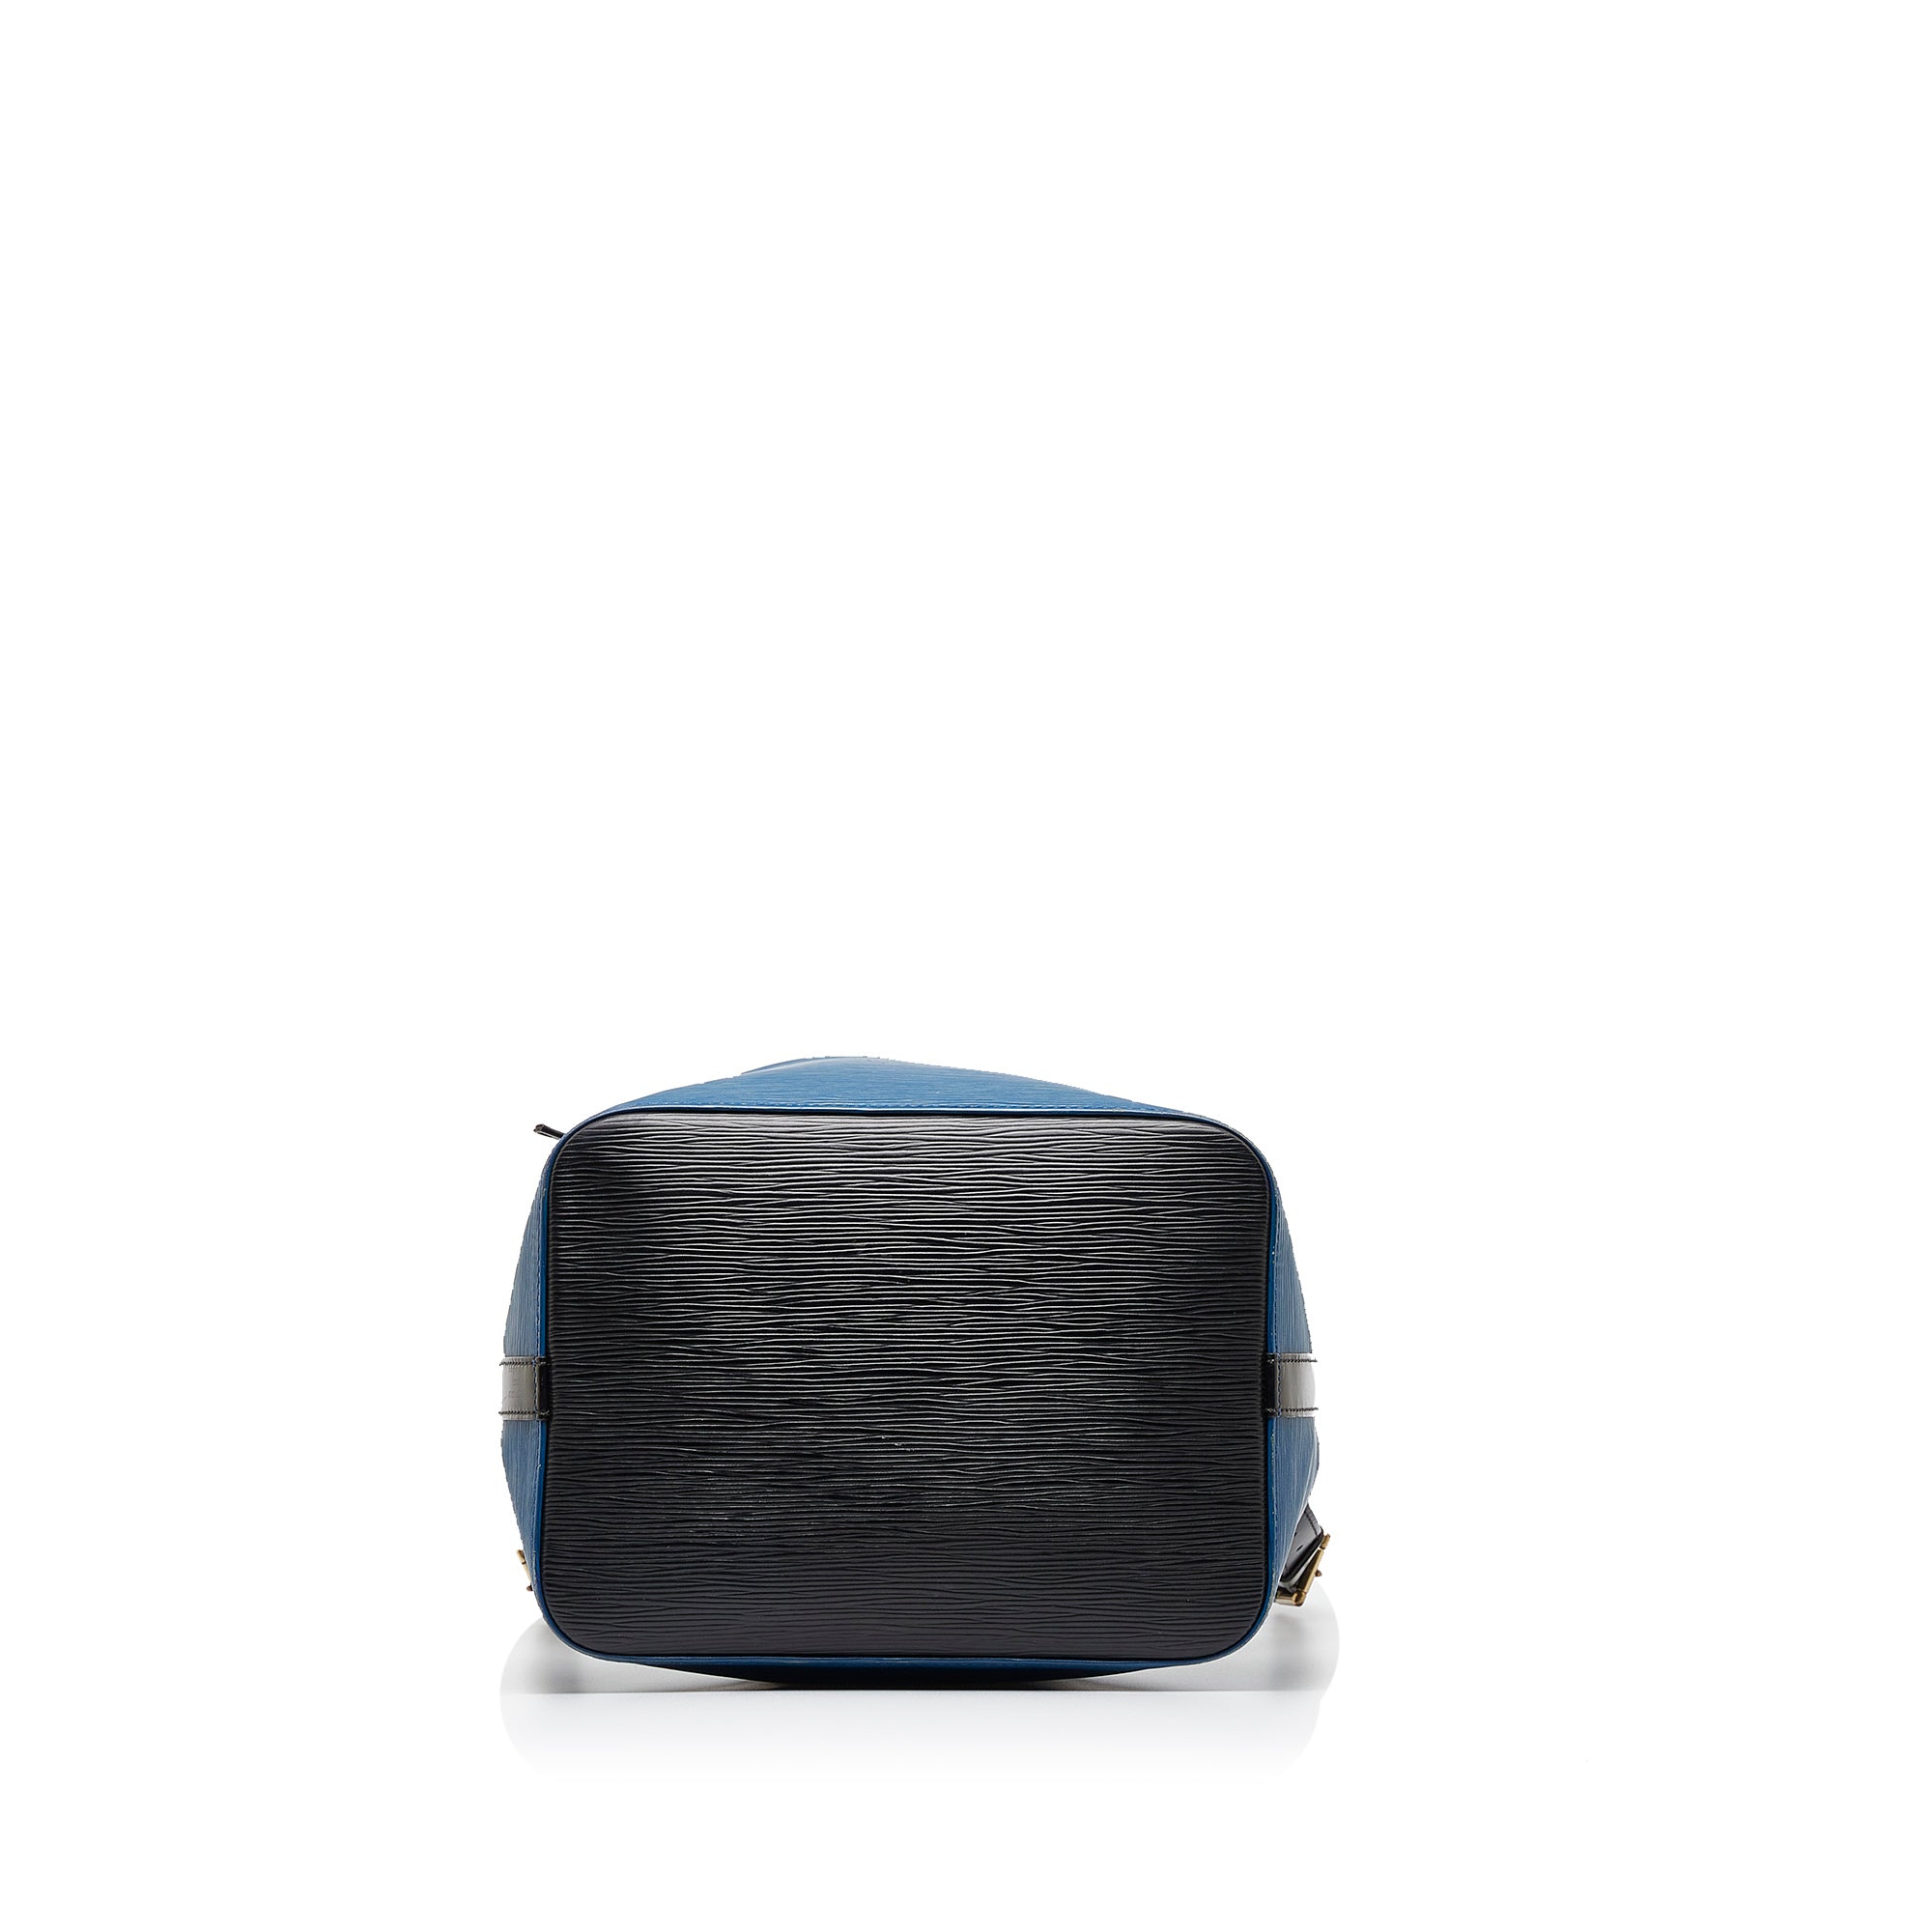 Louis Vuitton Bicolor Blue x Black Noe Petit Drawstring Bucket